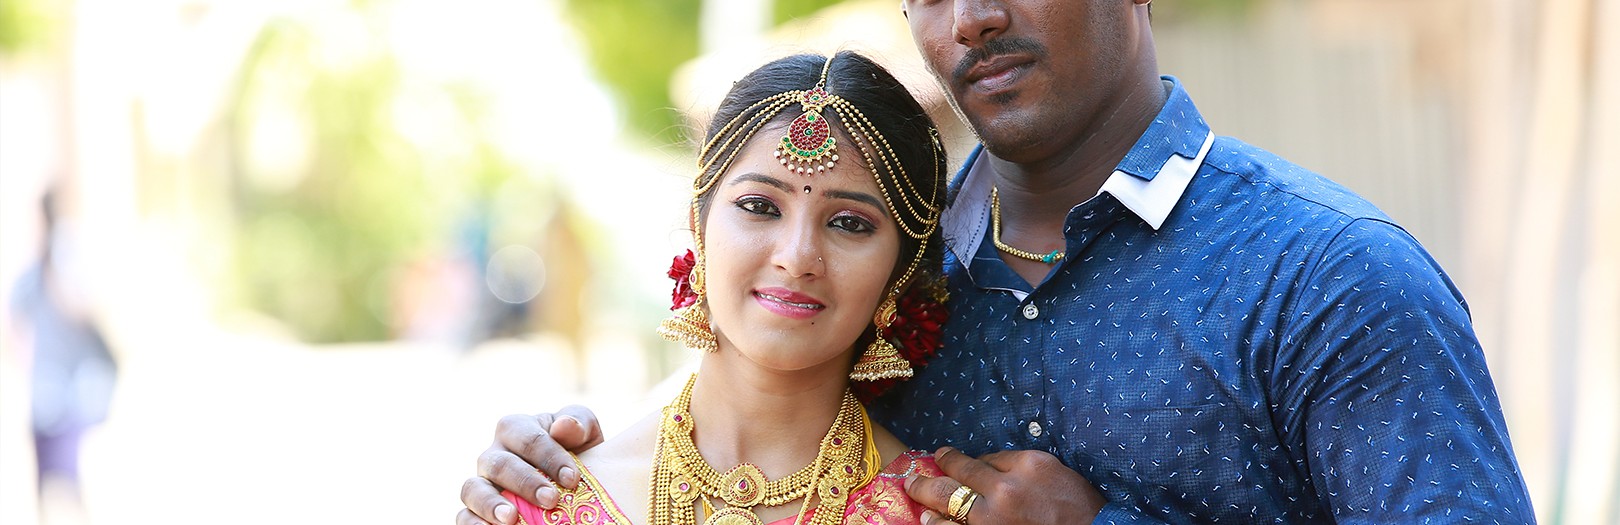 professional candid wedding photography in Madurai 5